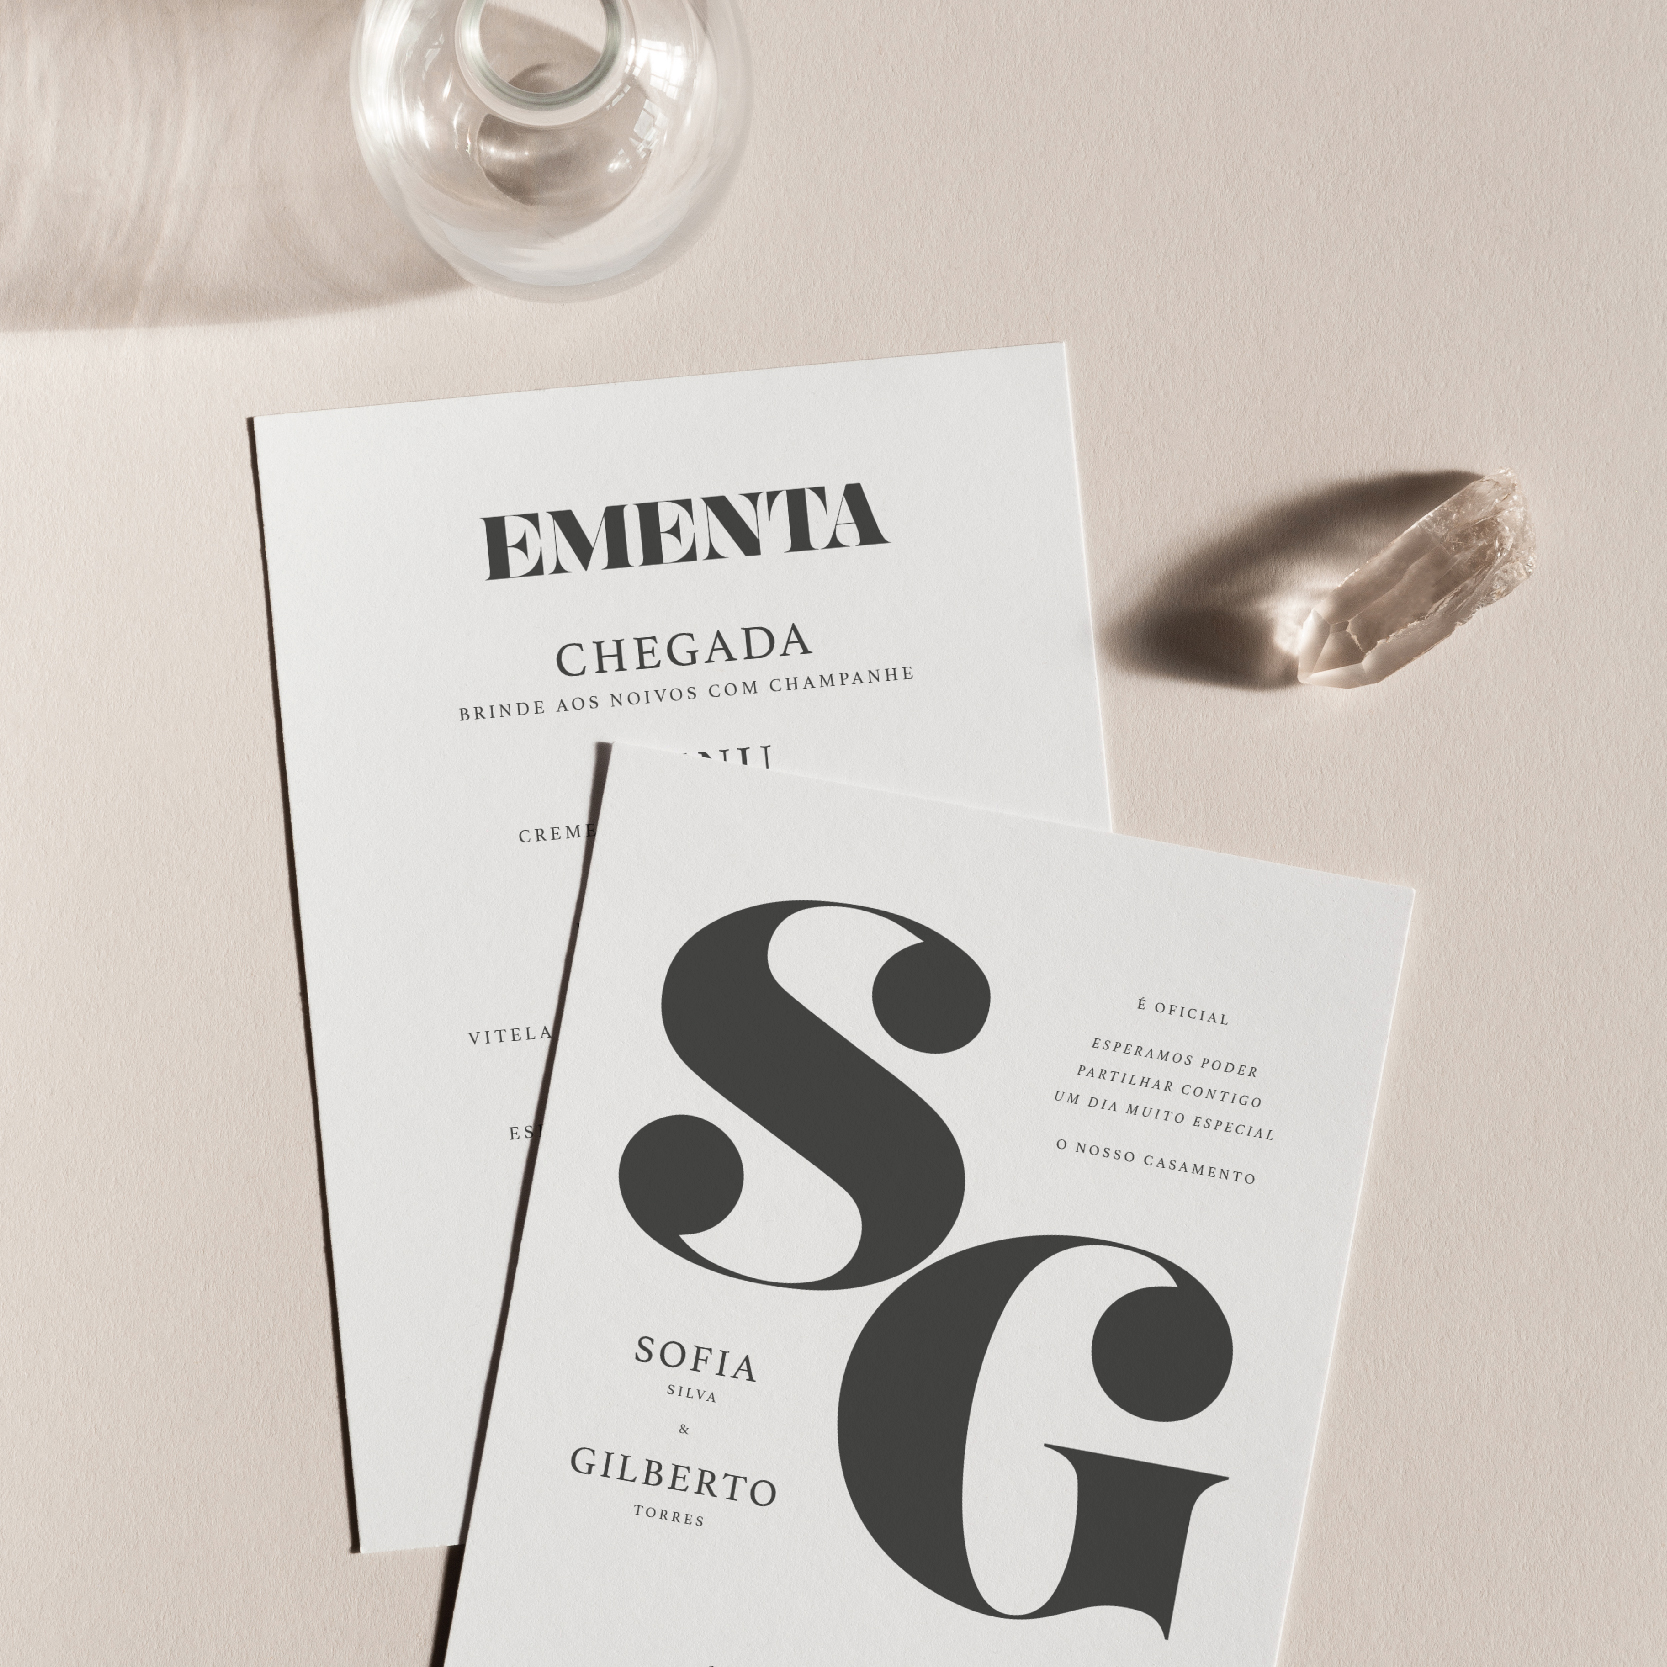 Convite de casamento de estilo tipográfico com as letras SG pretas e fundo branco